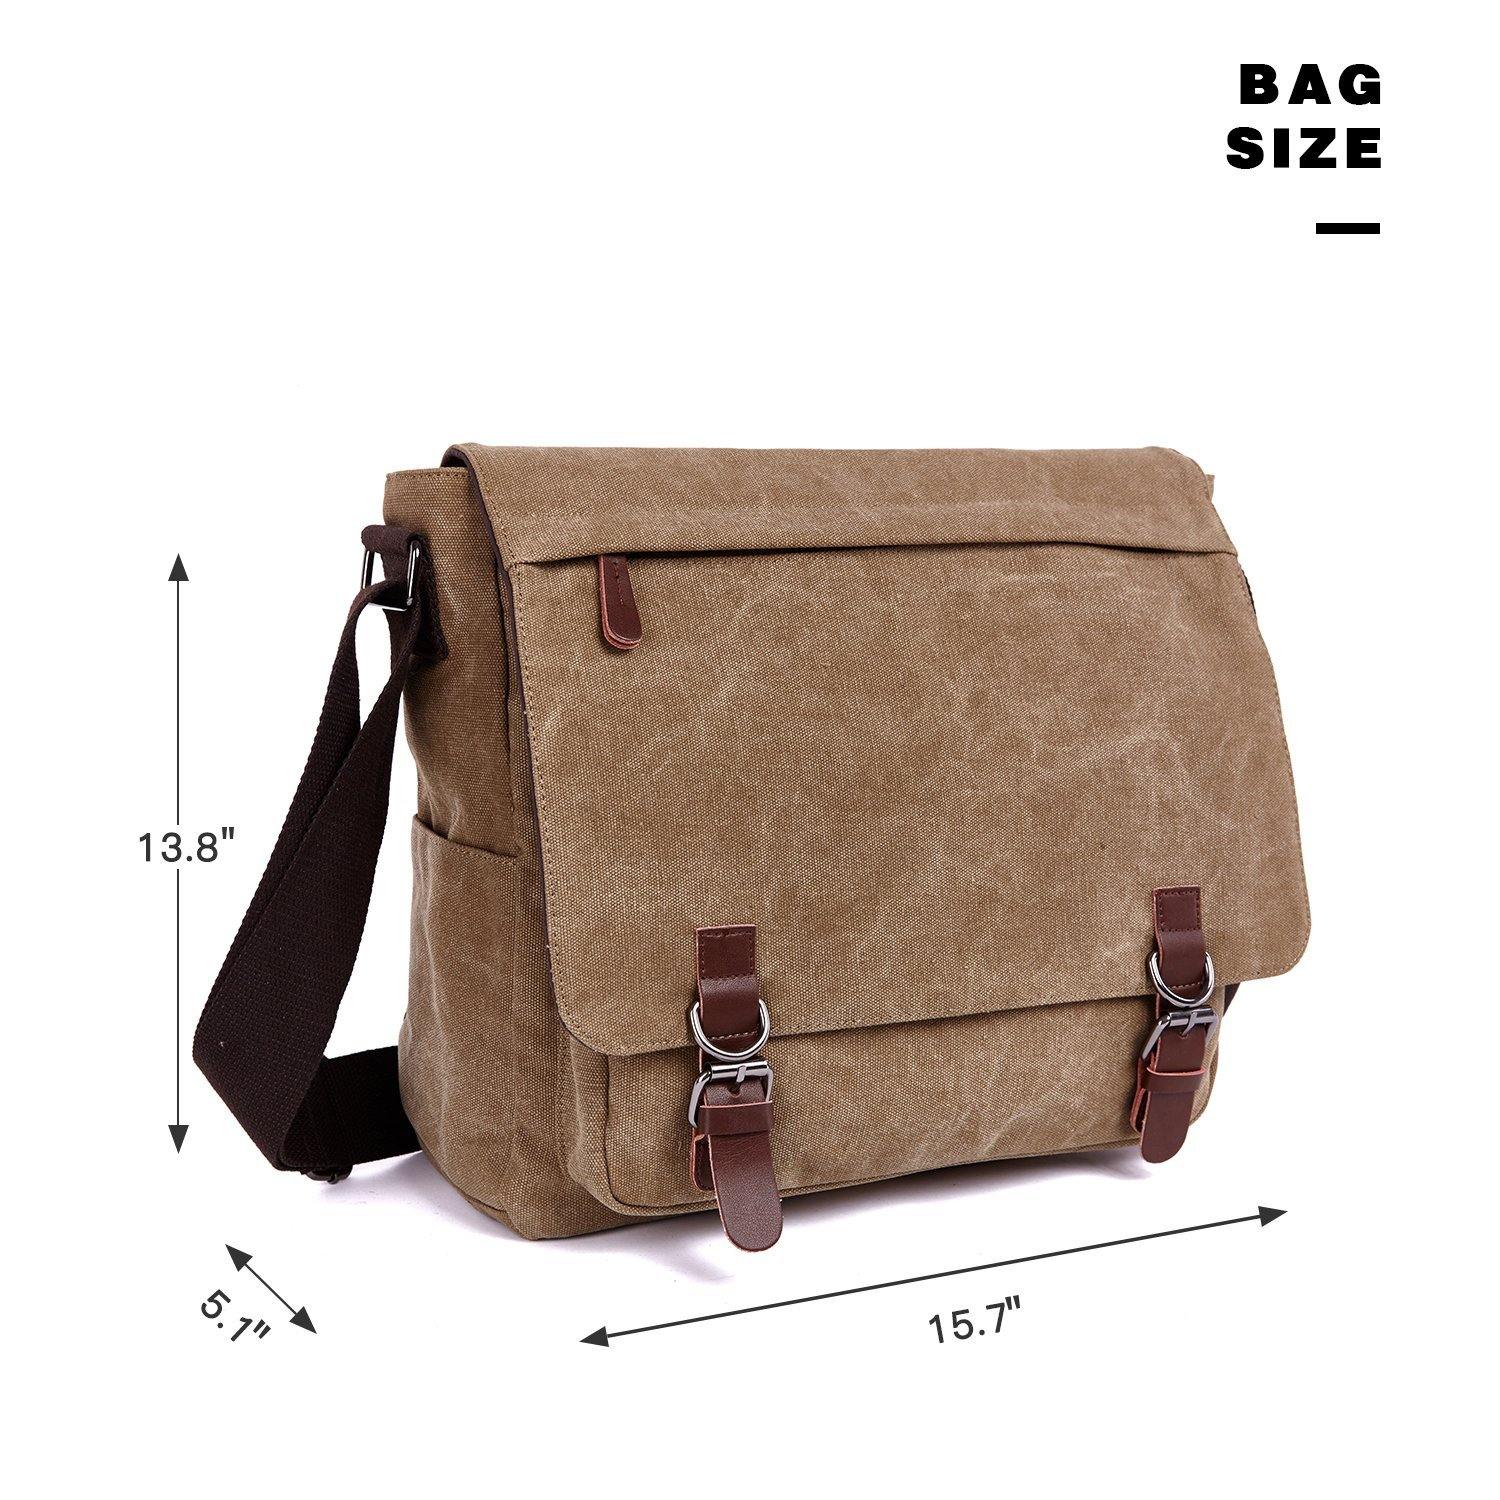 Stonington Daily Carry Work Bag | Travel Backpacks at L.L.Bean